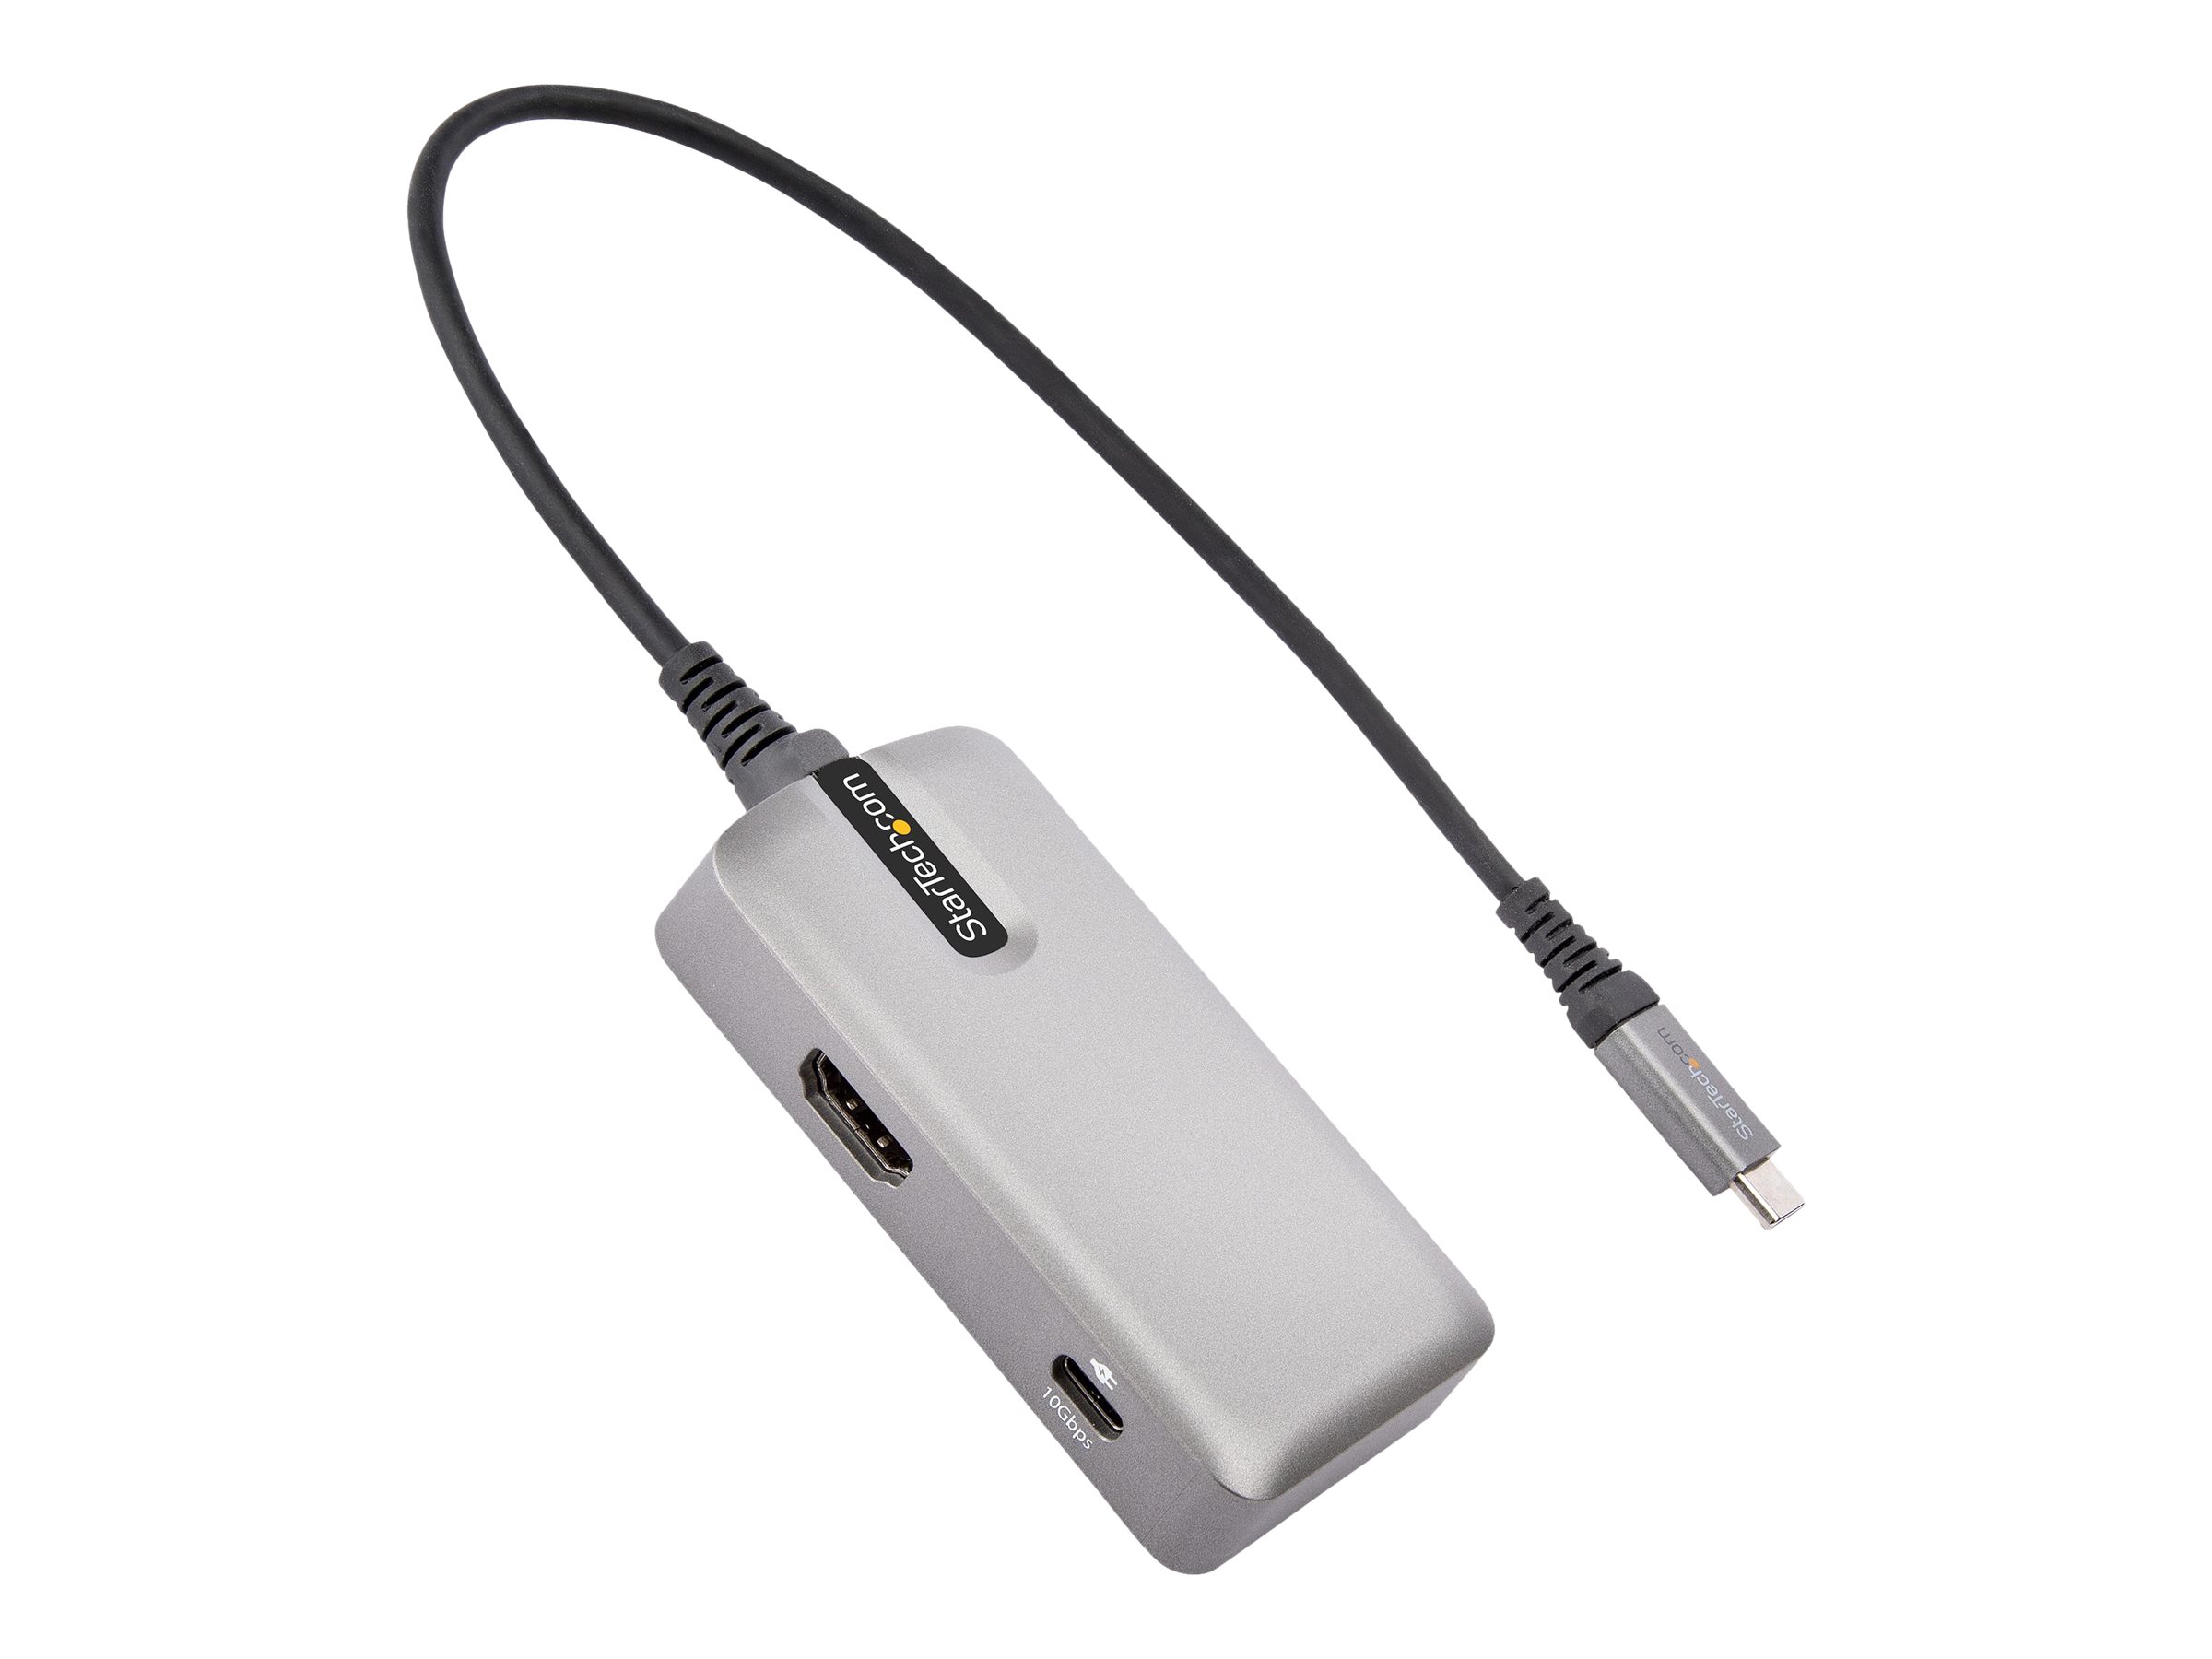 StarTech Adaptador de Audio y Carga USB-C a USB-C/Jack 3.5mm